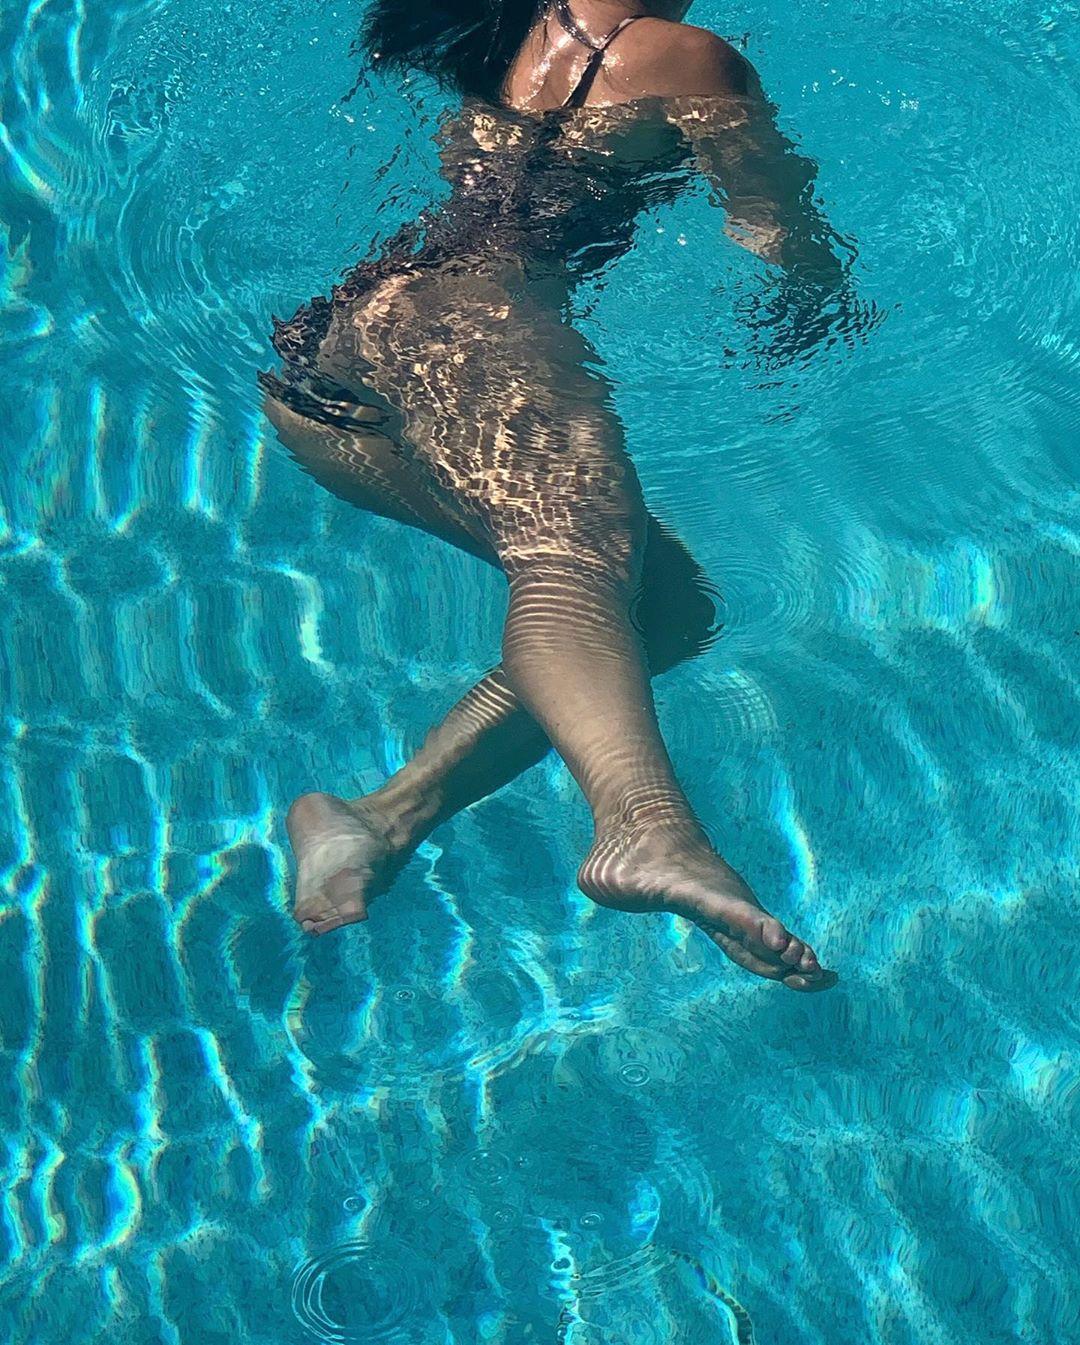 Kourtney Kardashian Drops INSANE Cheetahlious Bikini Shots With Full Underwater Booty The